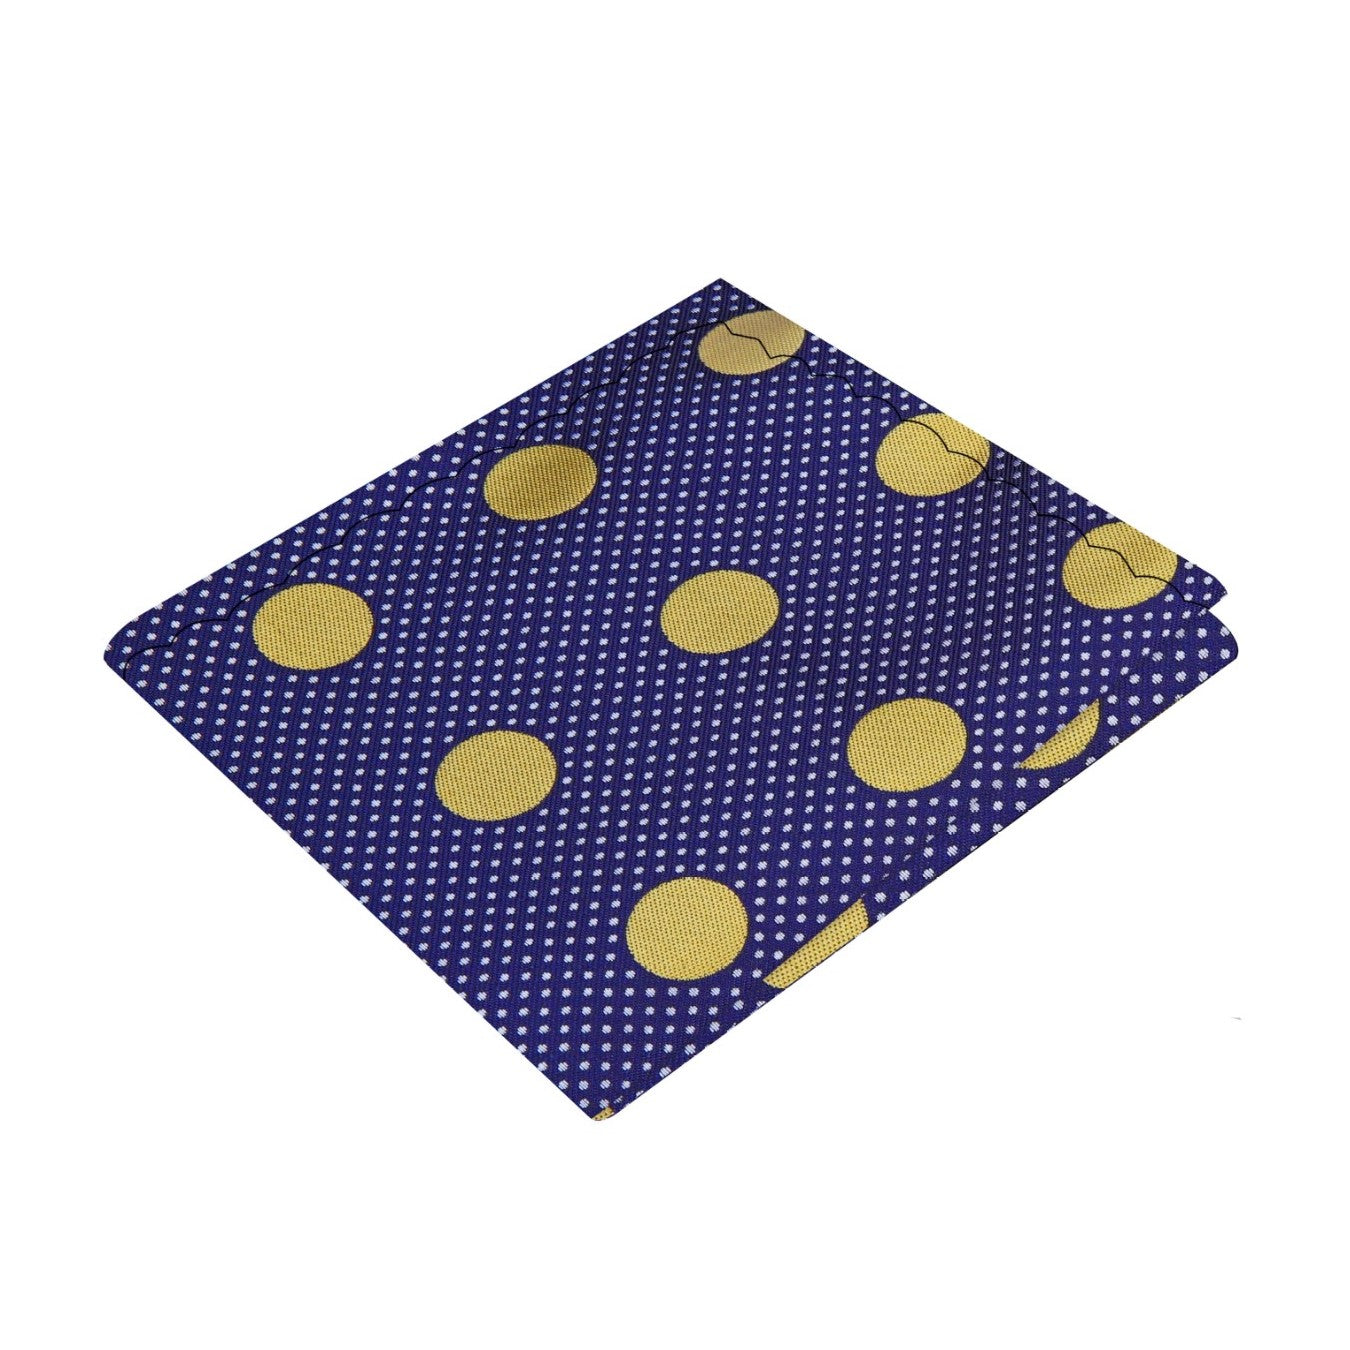 A Dark Blue, Gold Dot Pattern Silk Pocket Square